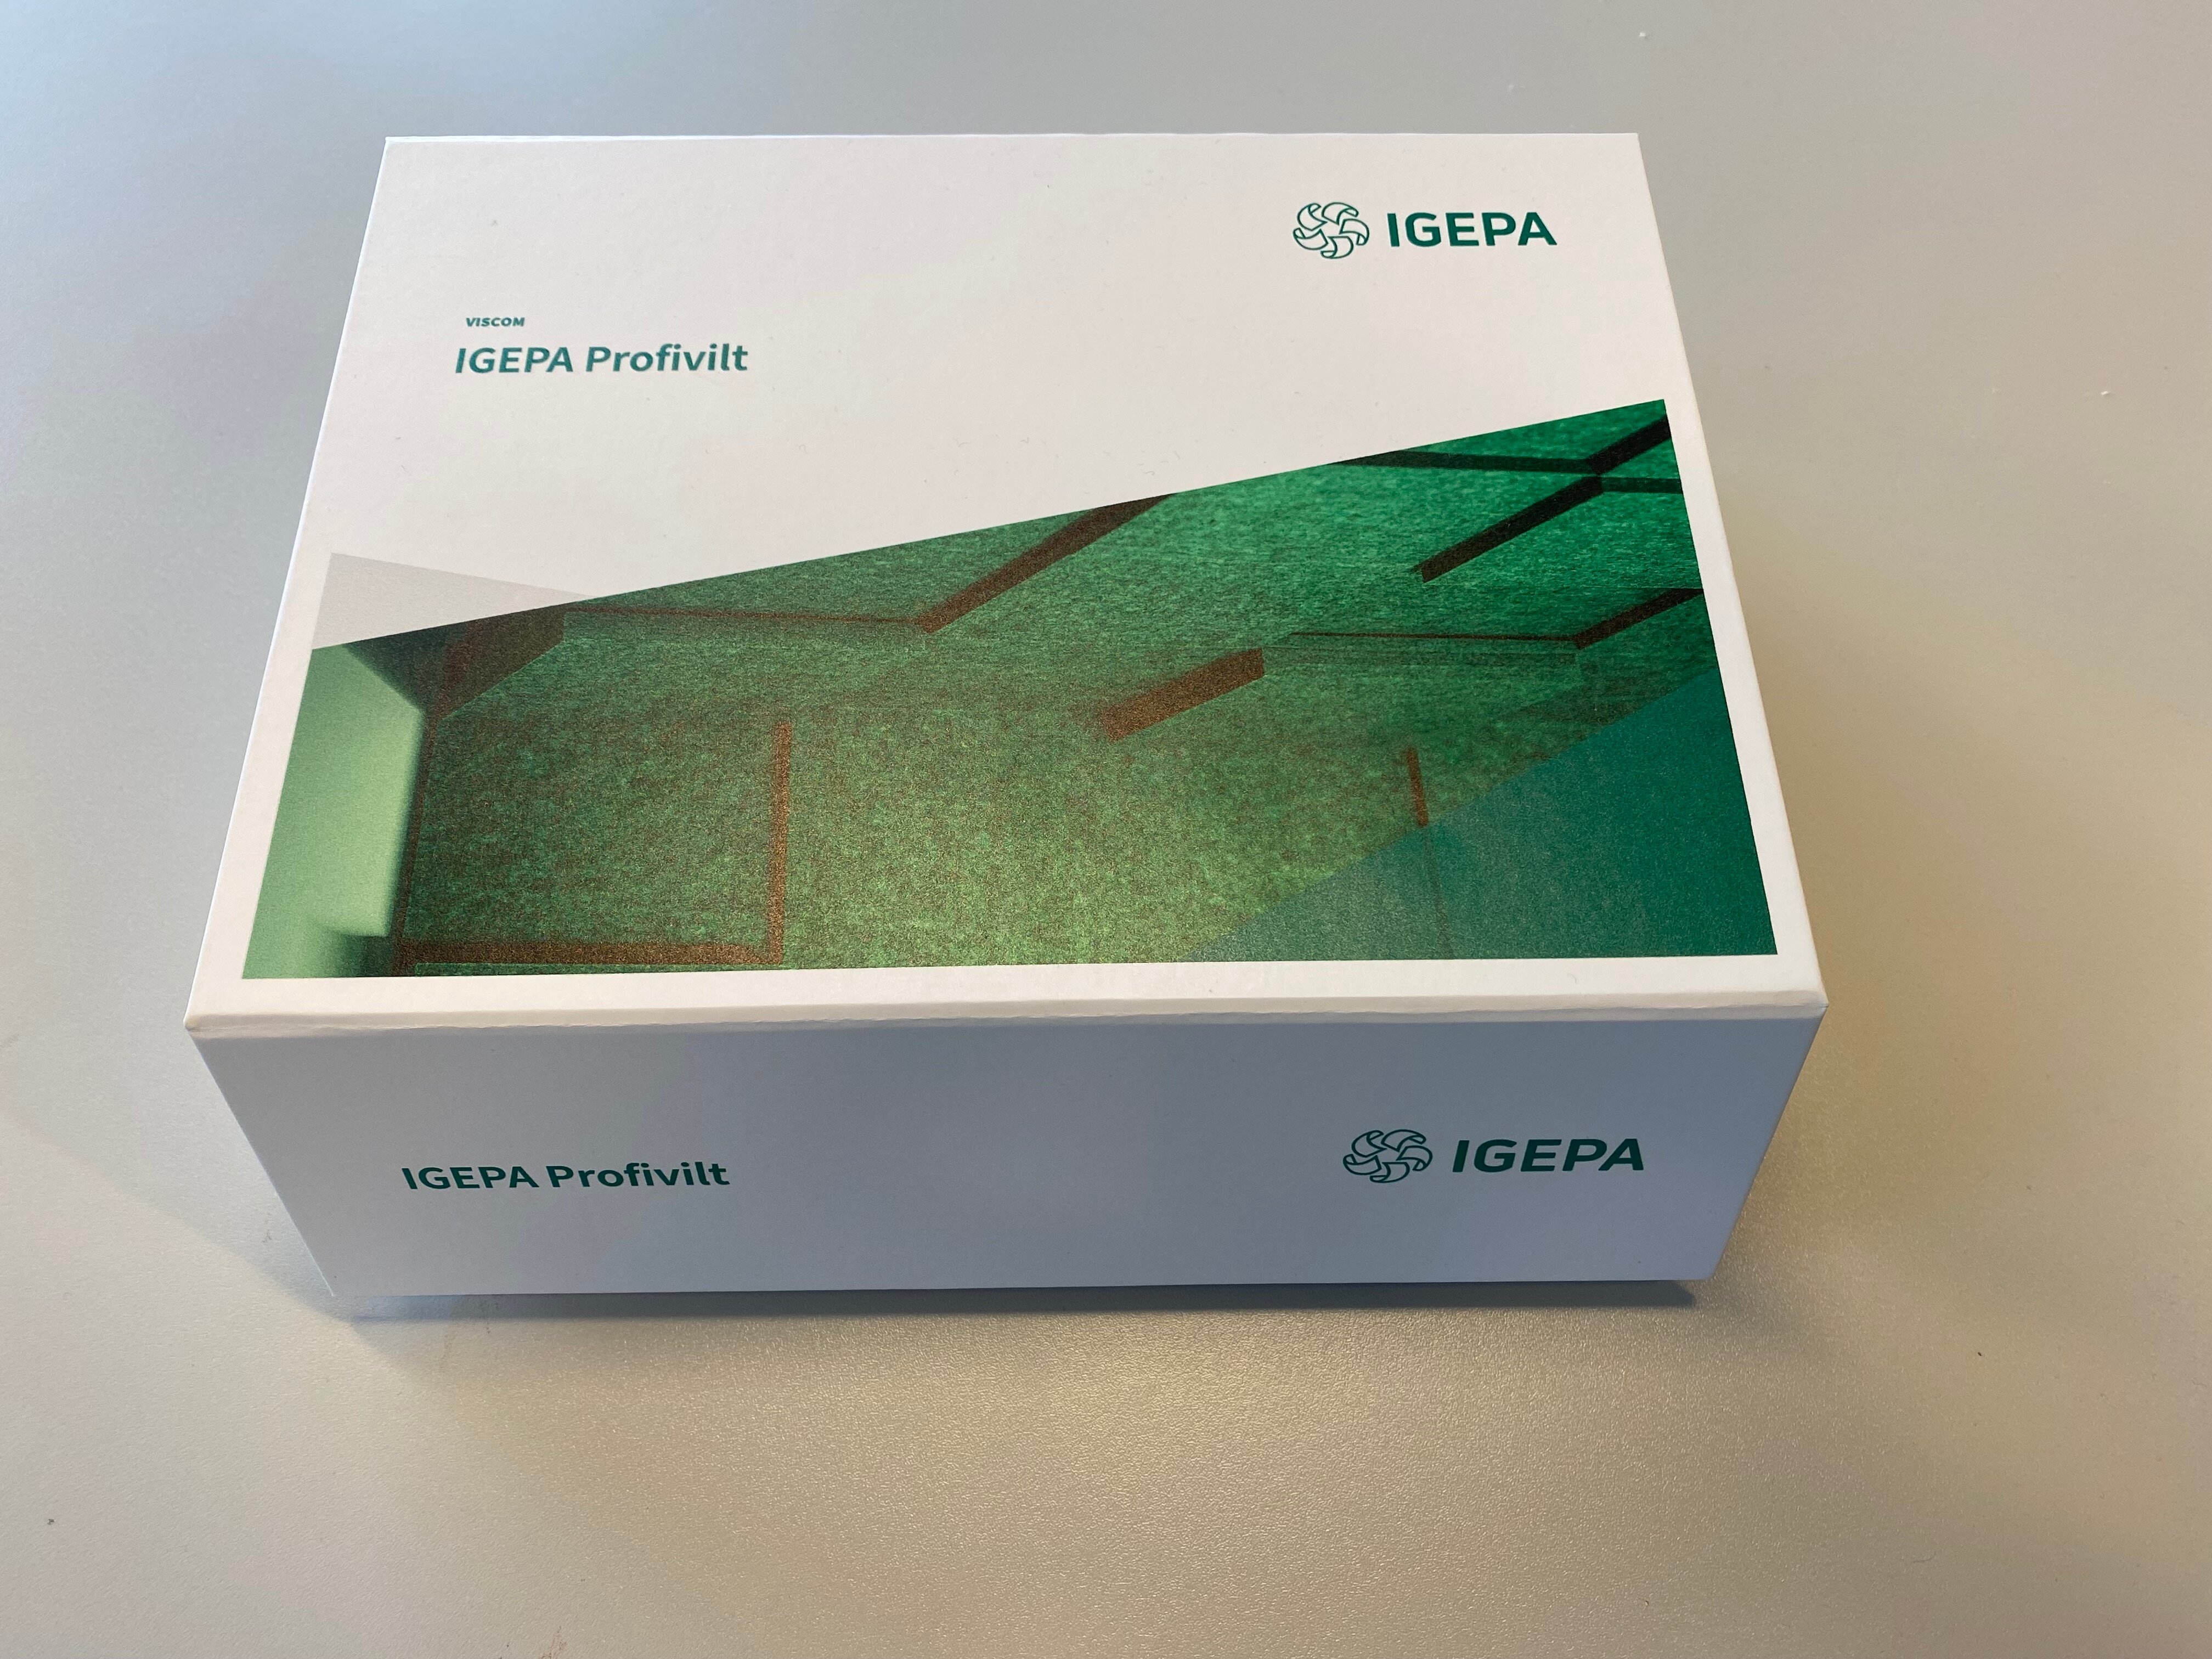 Igepa Profivilt sample box